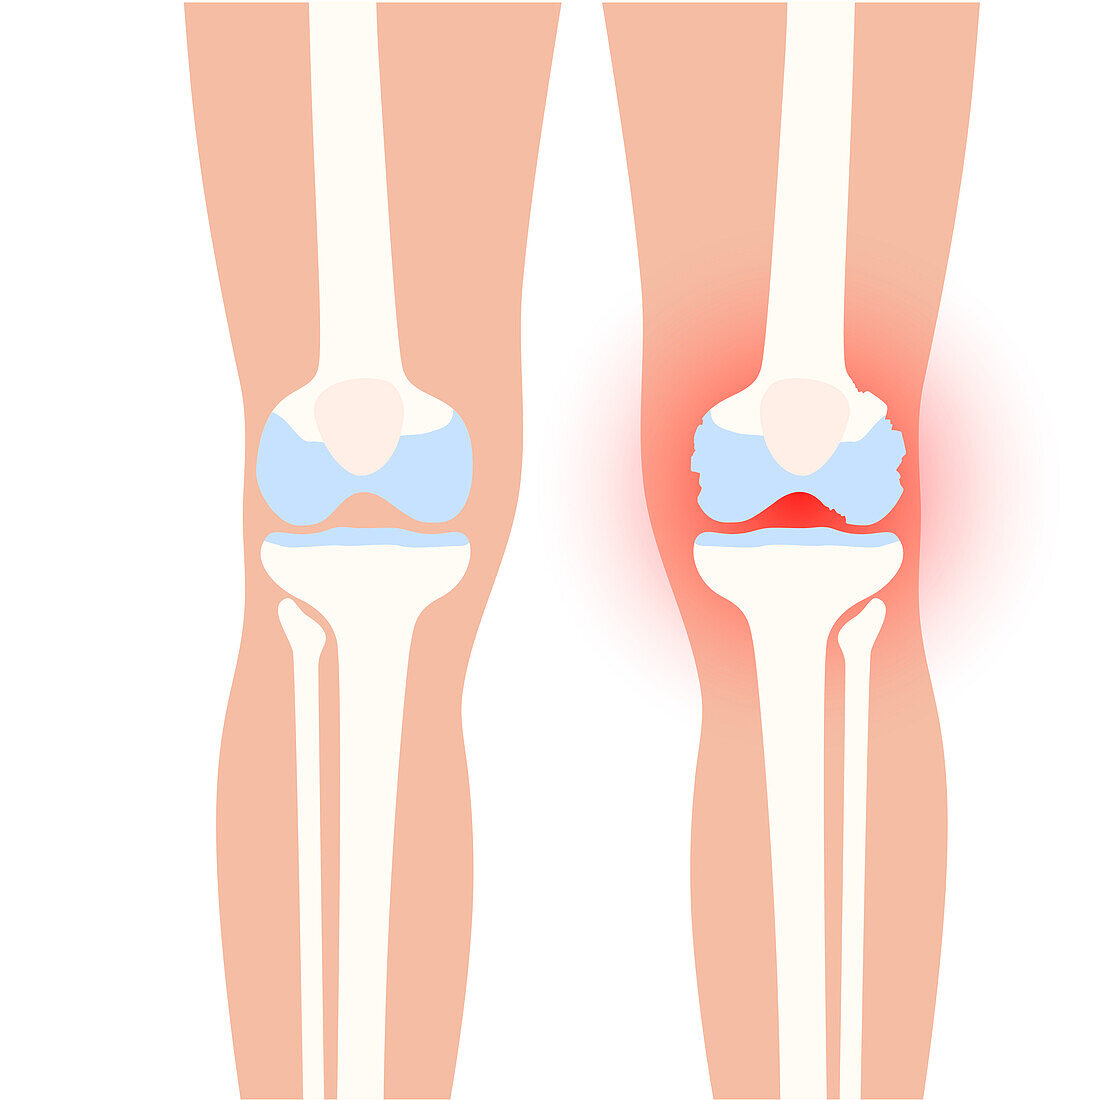 Arthritis of the knee, conceptual illustration